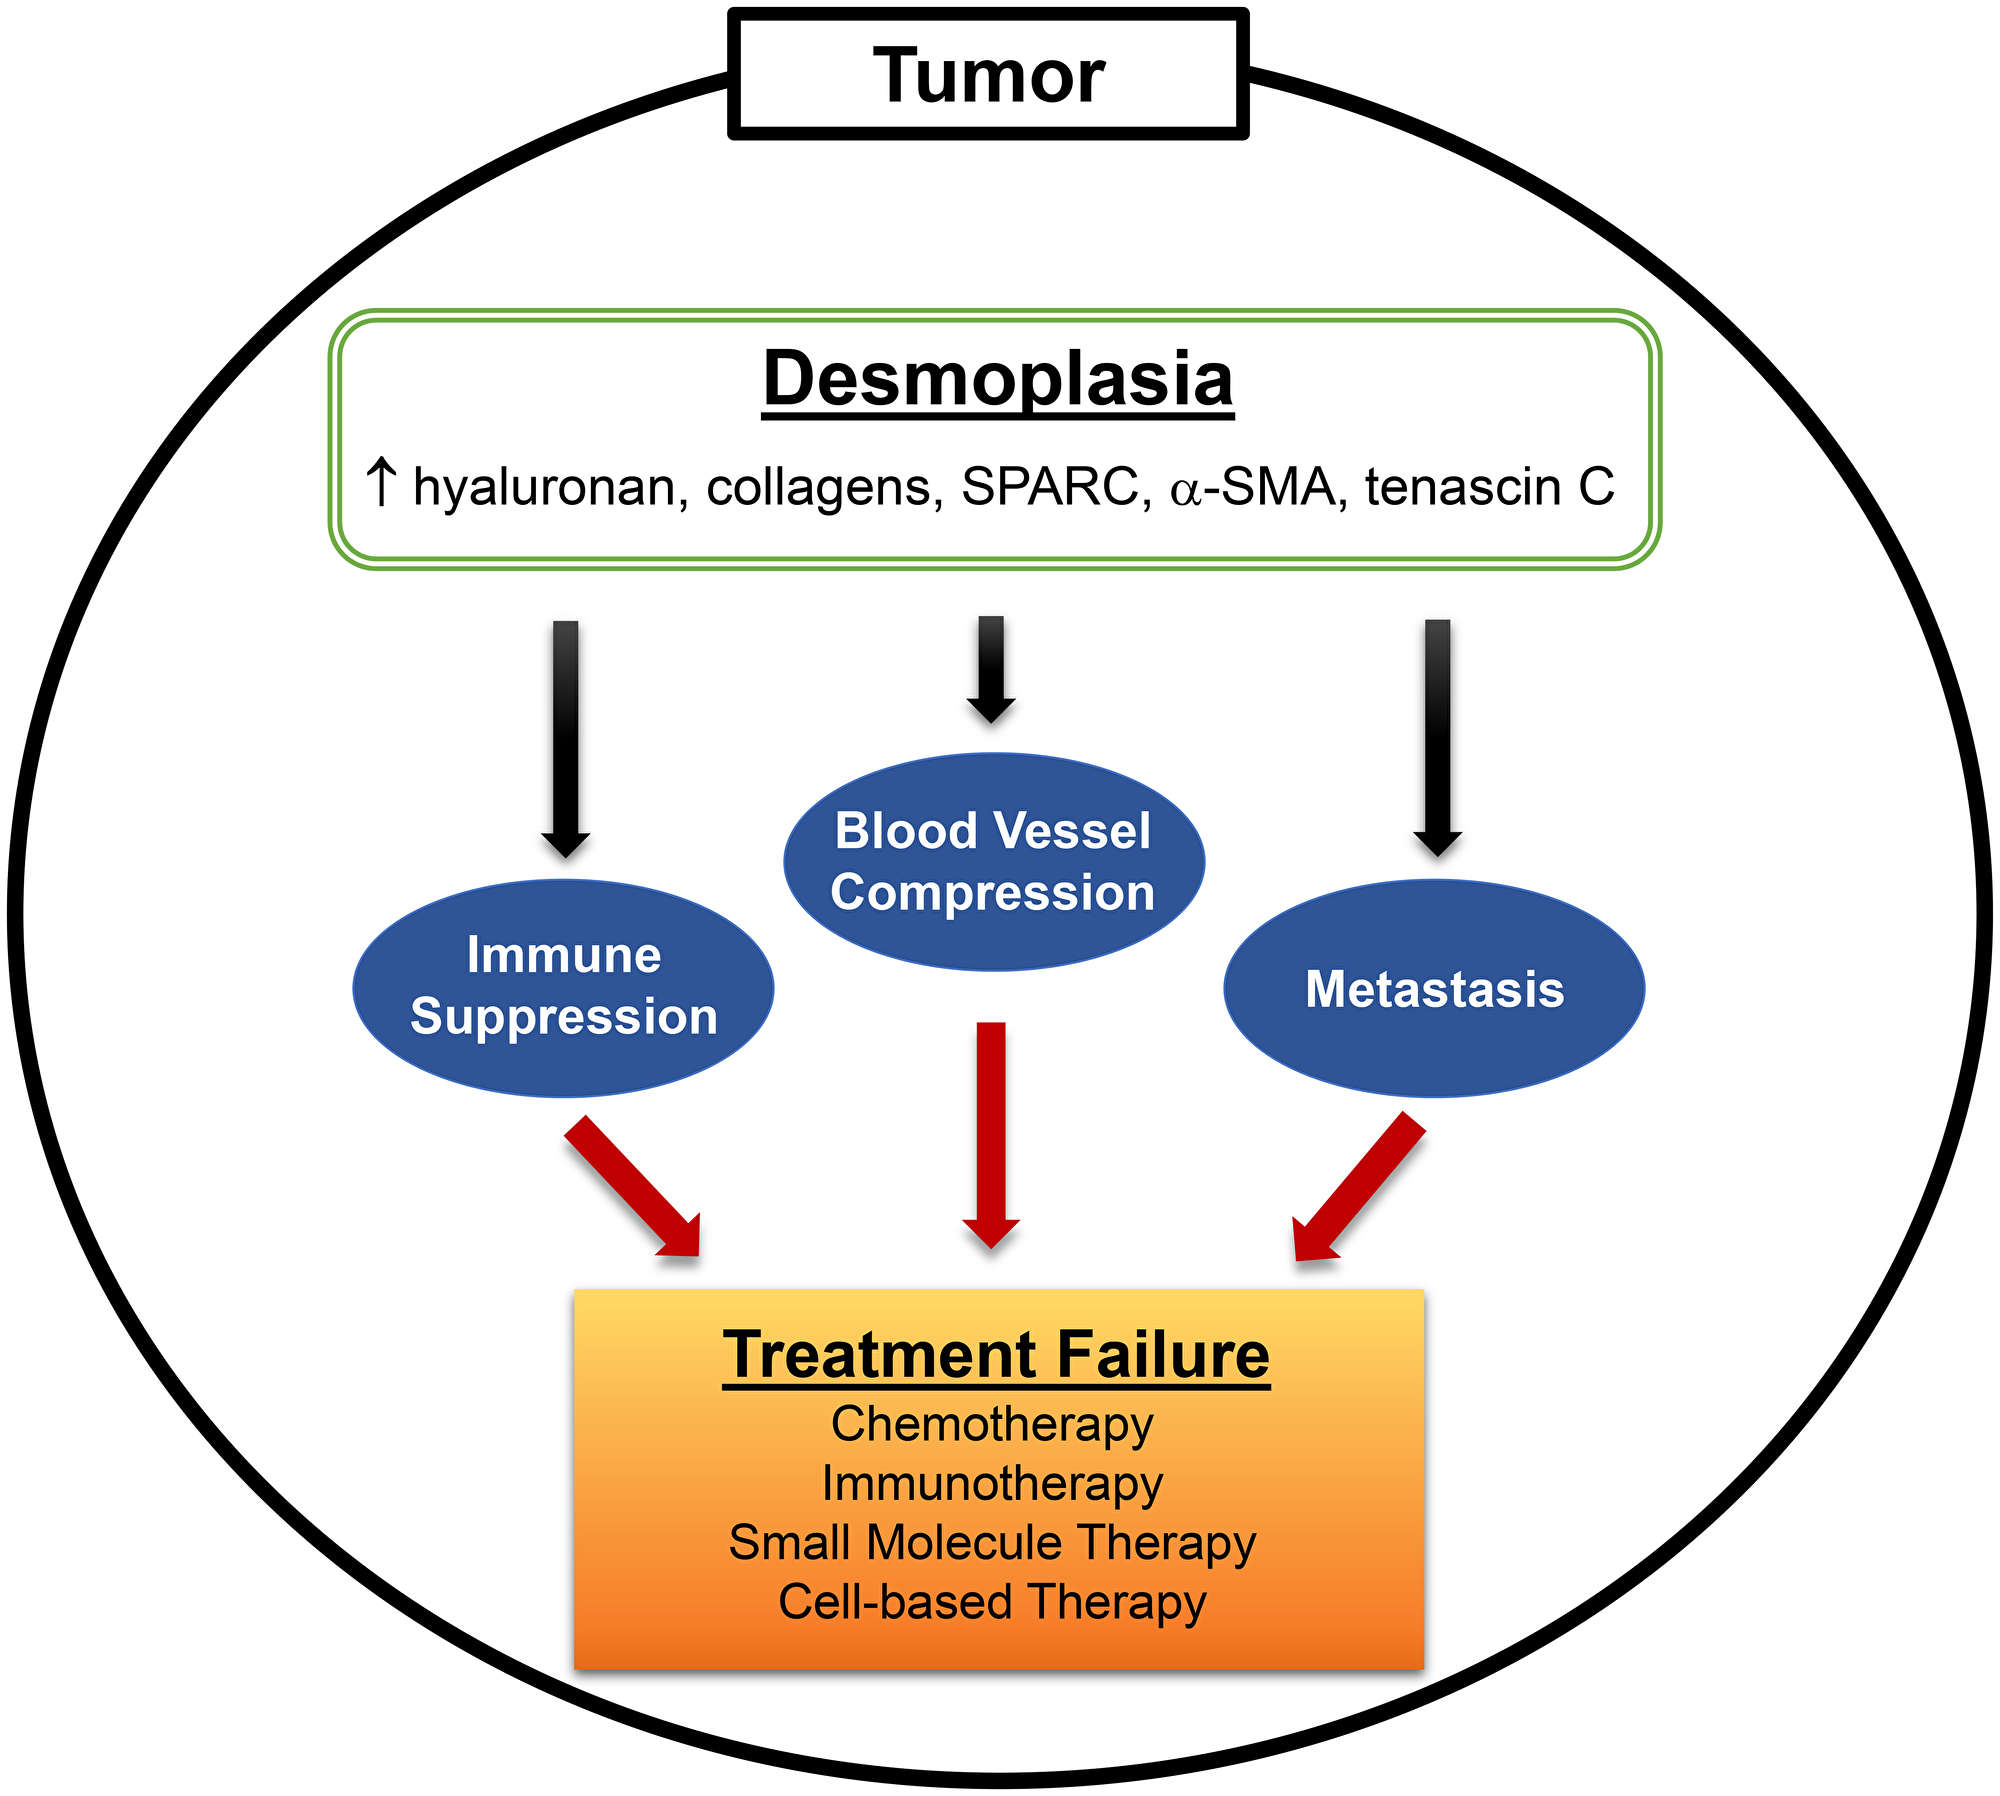 Desmoplasia is a major hallmark of PDAC.